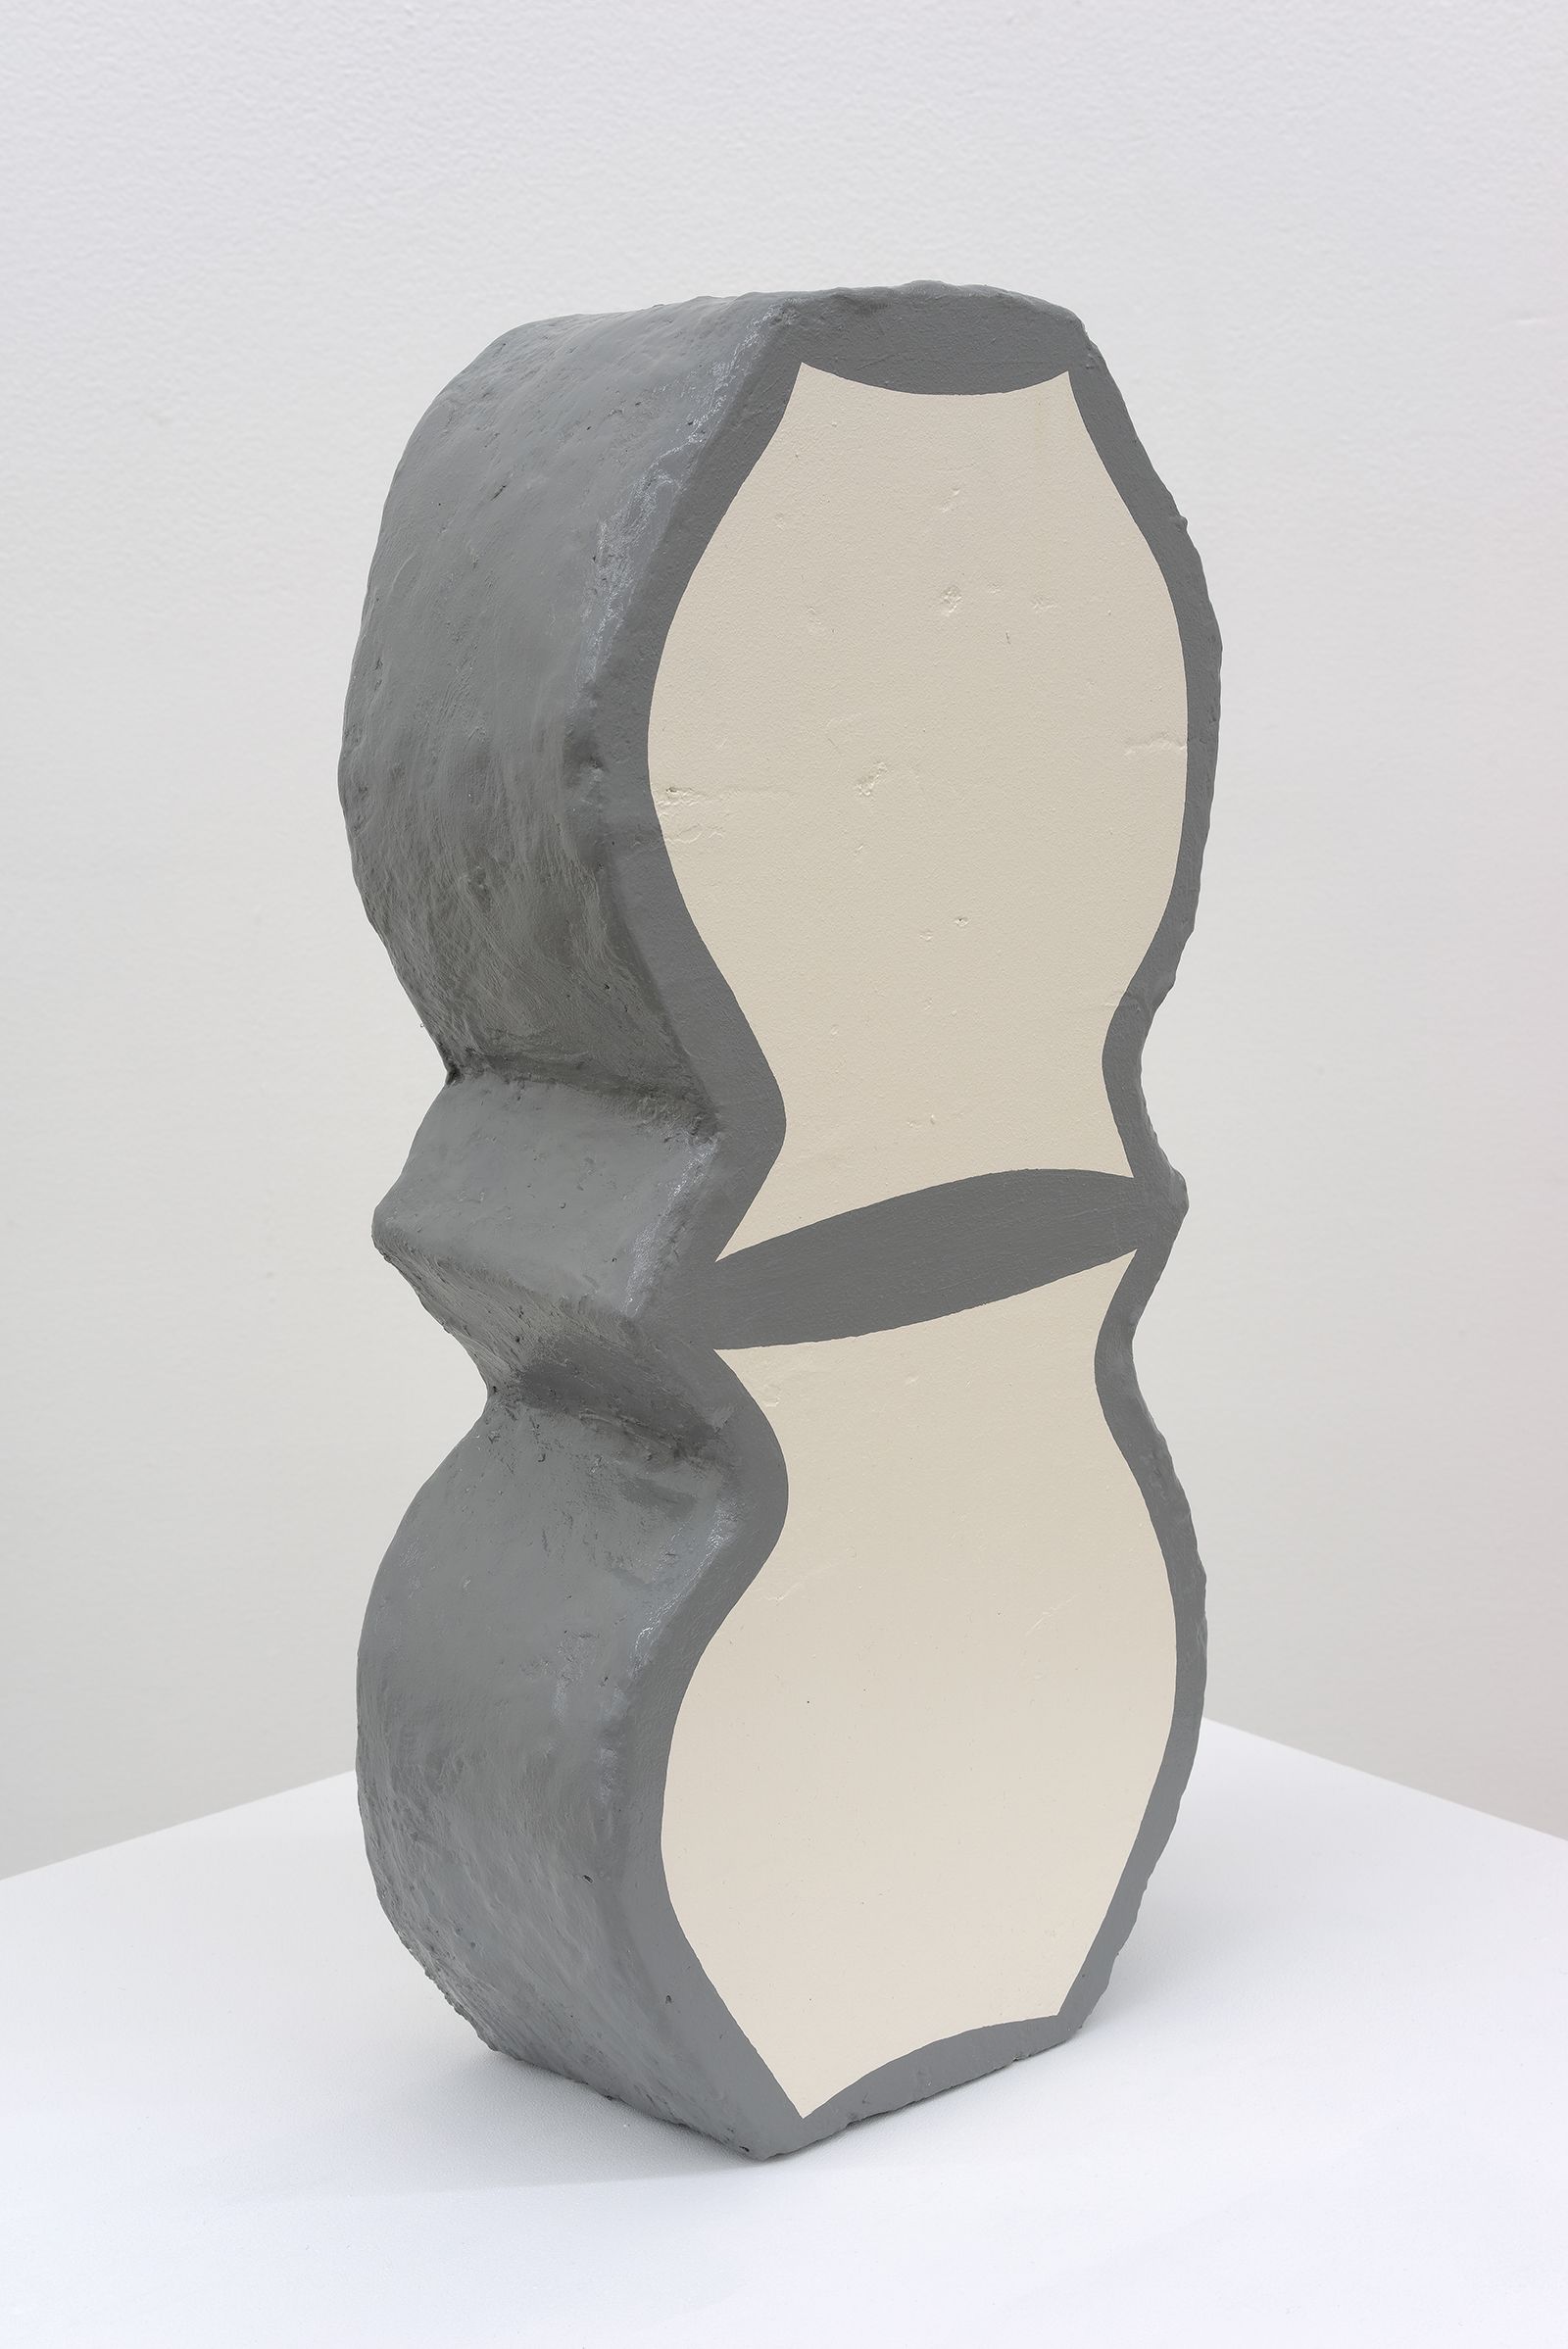 Denise Kupferschmidt, Vase, 2015, cement and acrylic, 15 1/2 x 14 1/4 x 3 1/2 in.